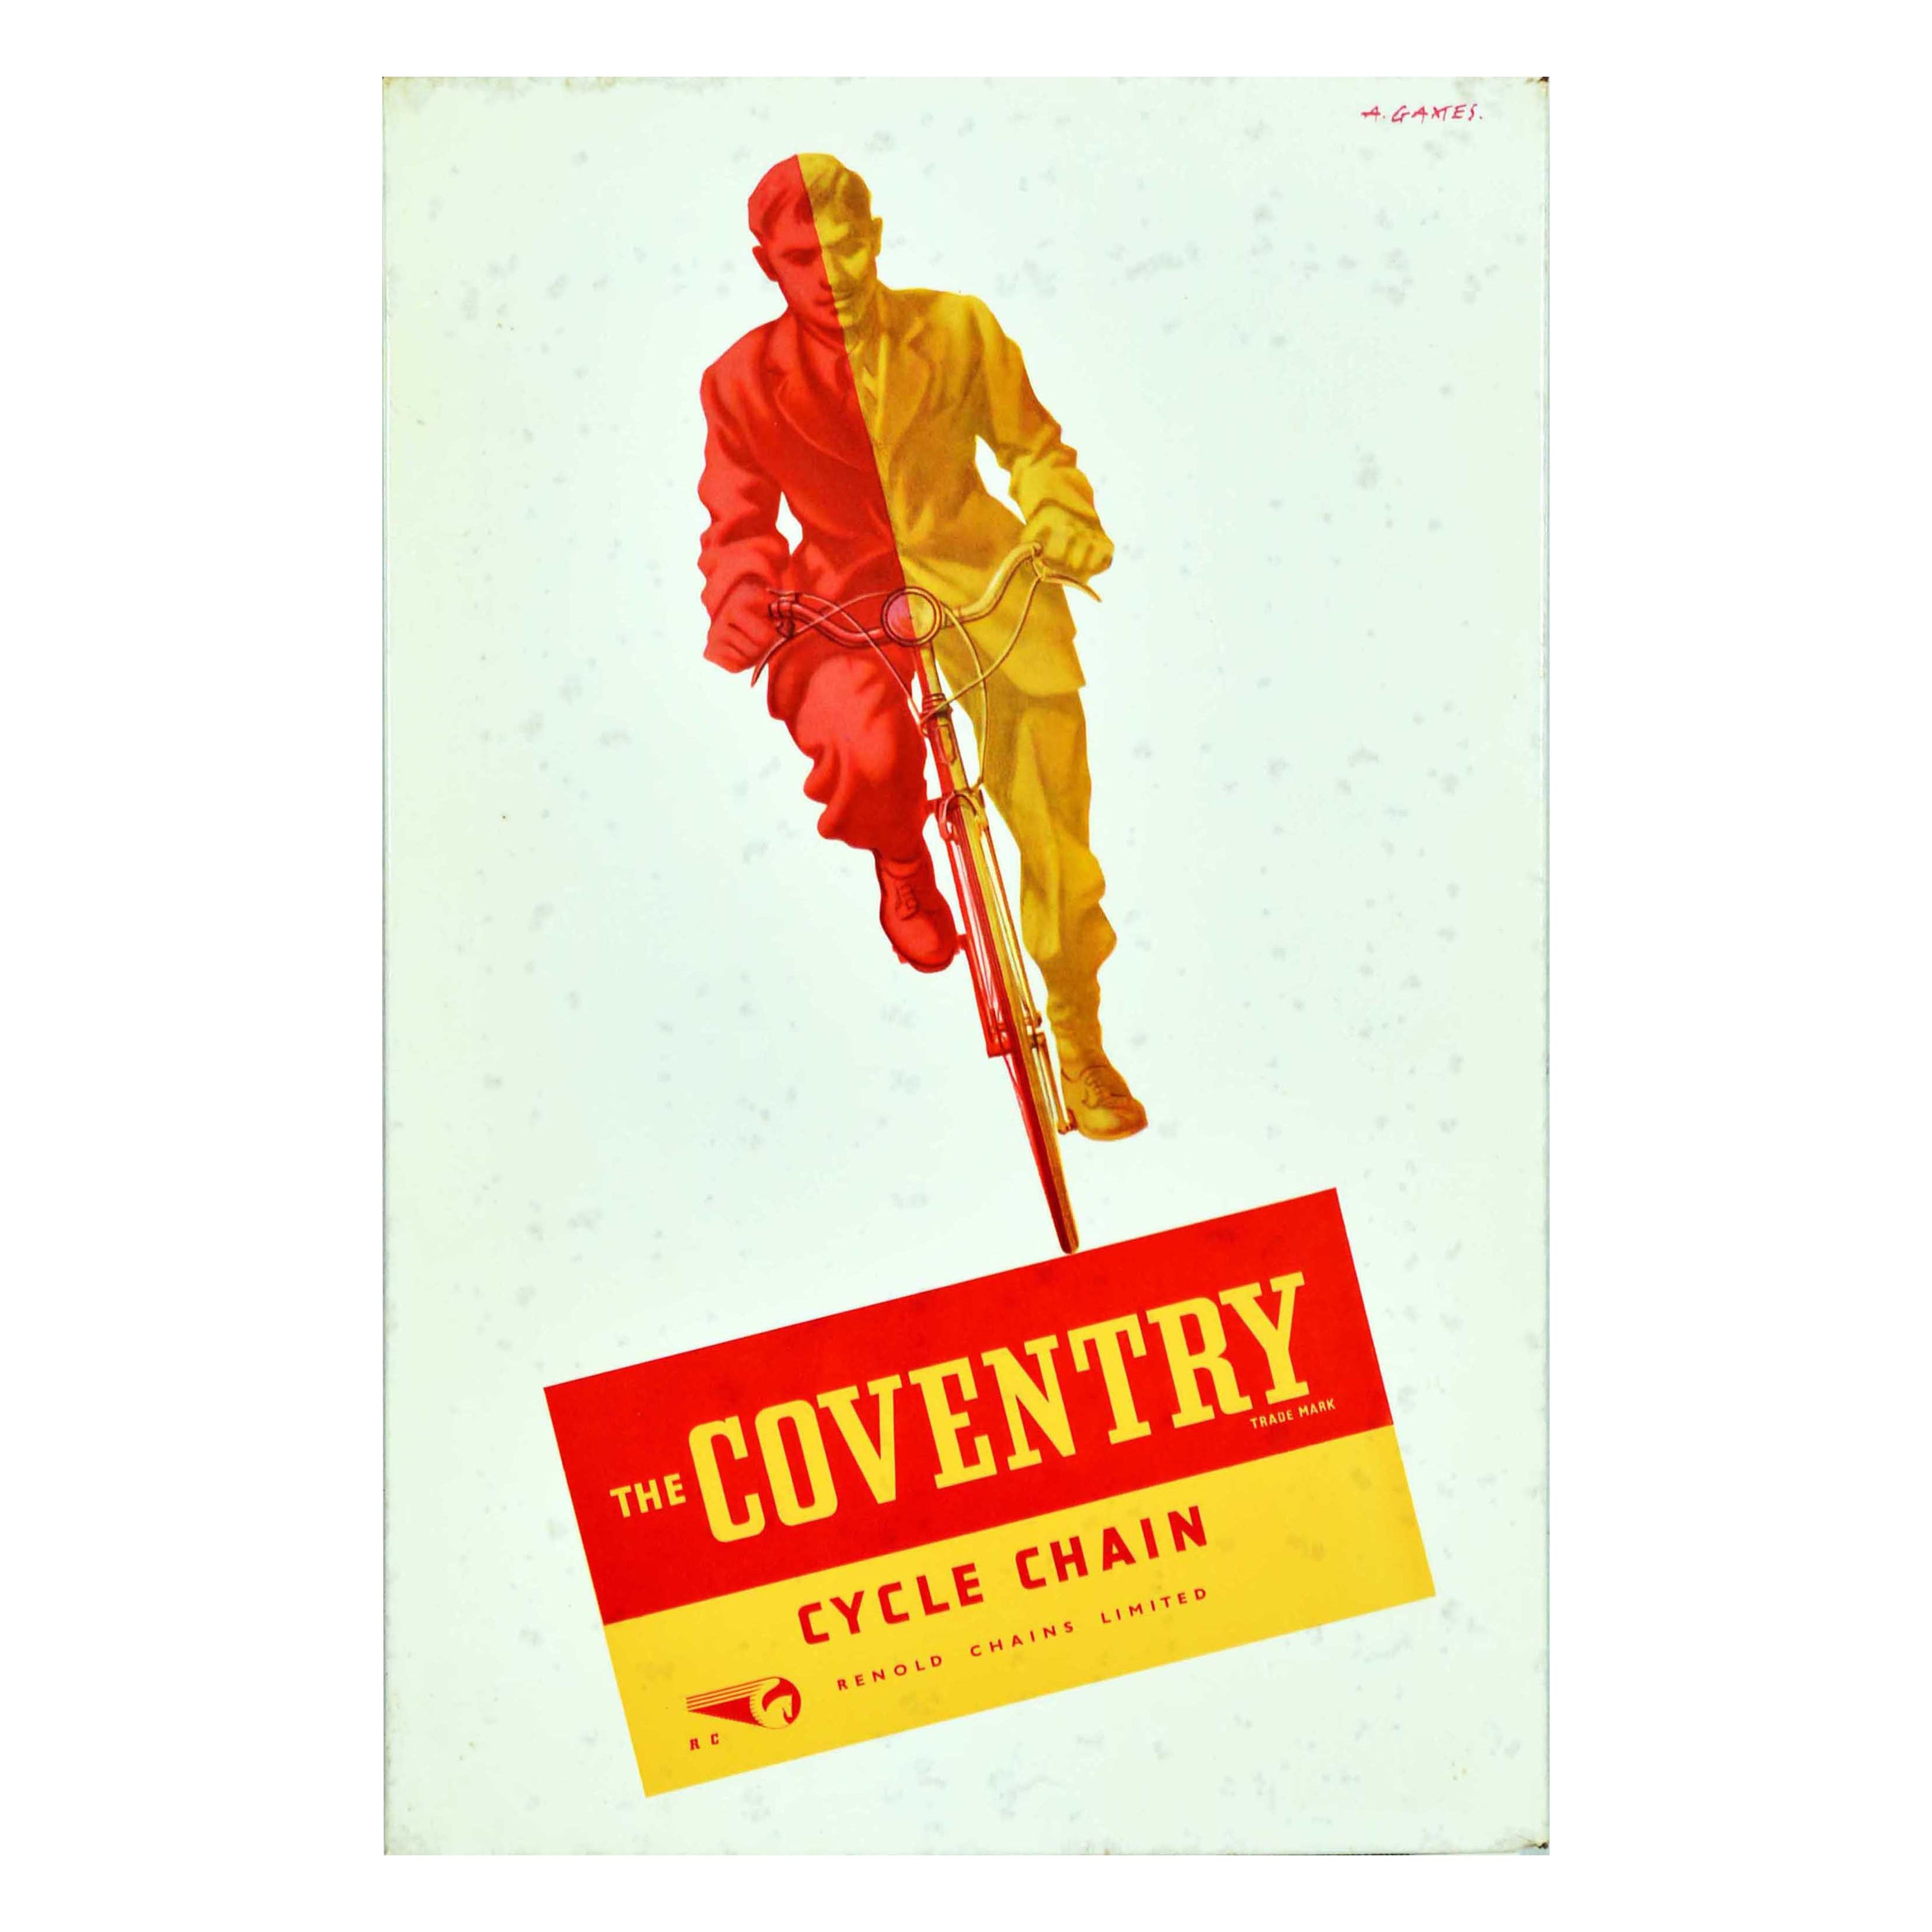 Original-Vintage-Poster, Renold Coventry Cycle Chain Abram Games, Radrennen im Angebot